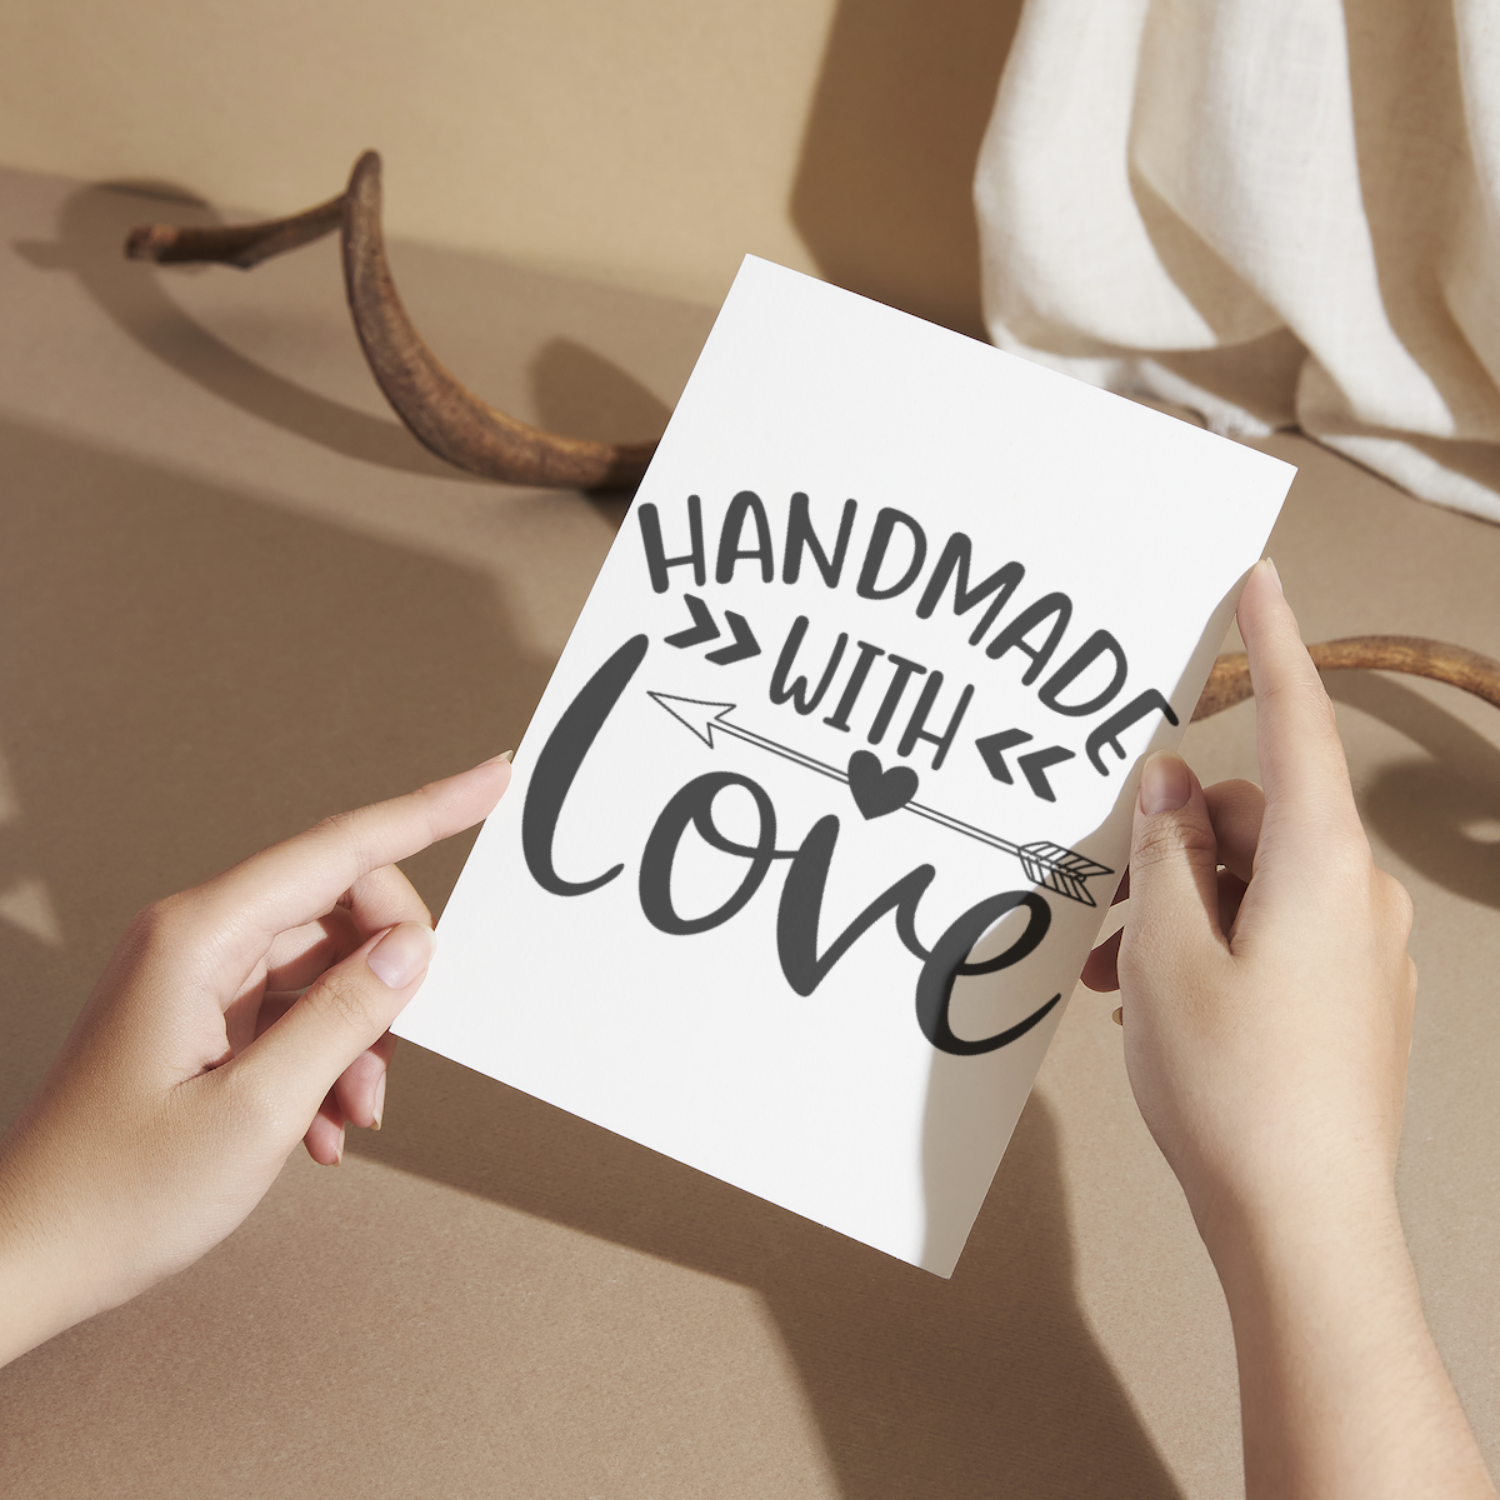 HANDMADE WITH LOVE SVG | Digital Download | Cut File | SVG